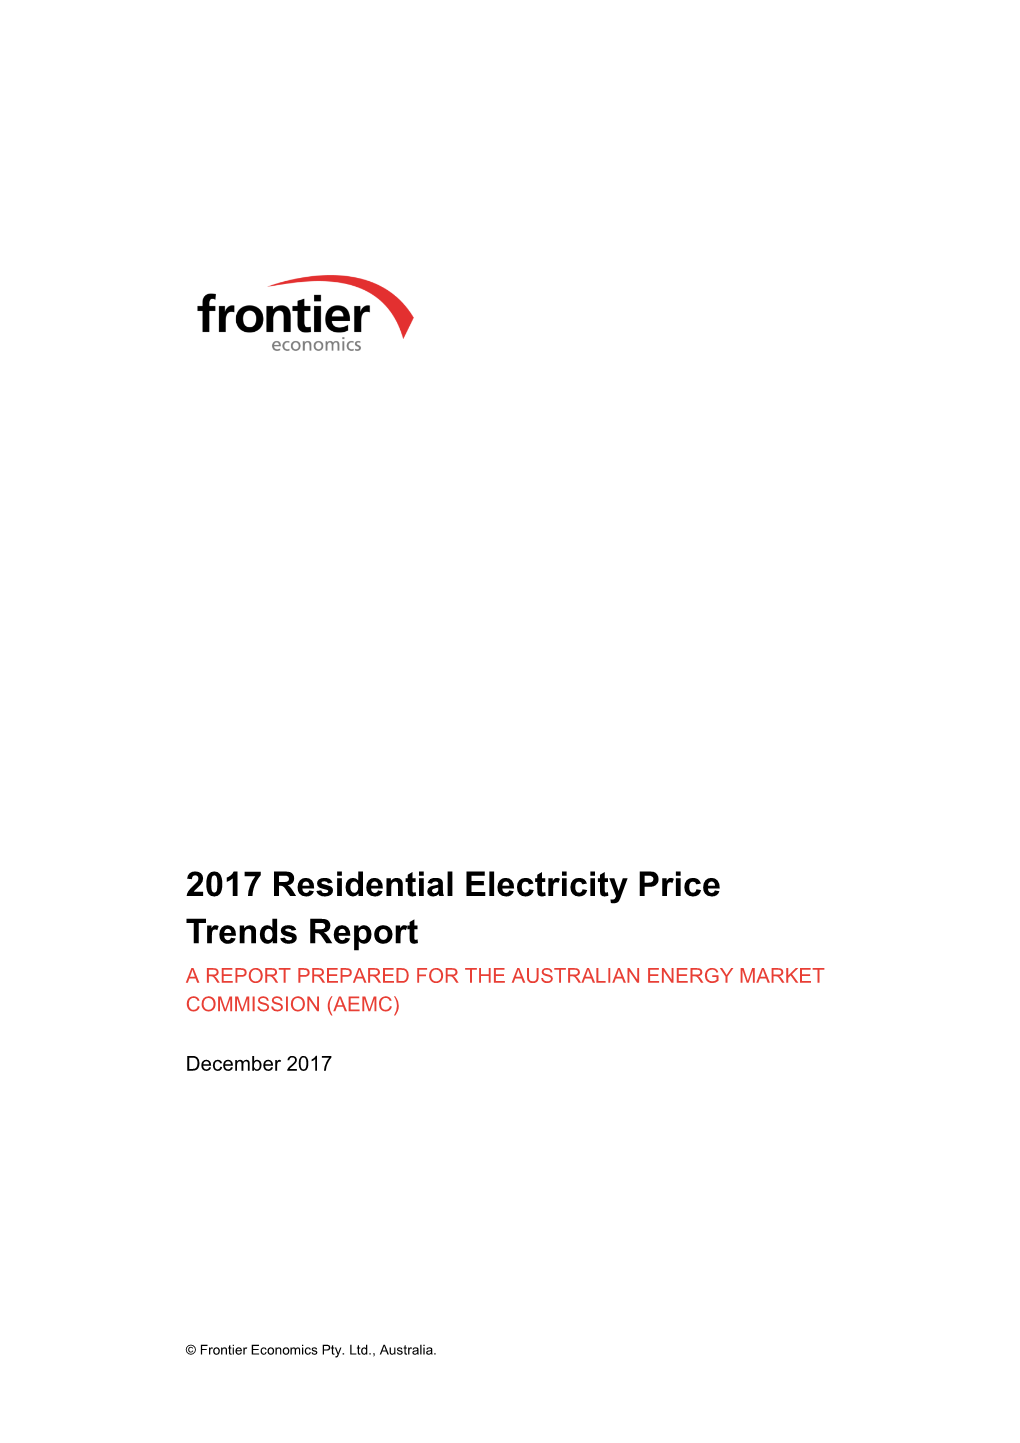 Frontier Economics – 2017 Residential Electricity Price Trends